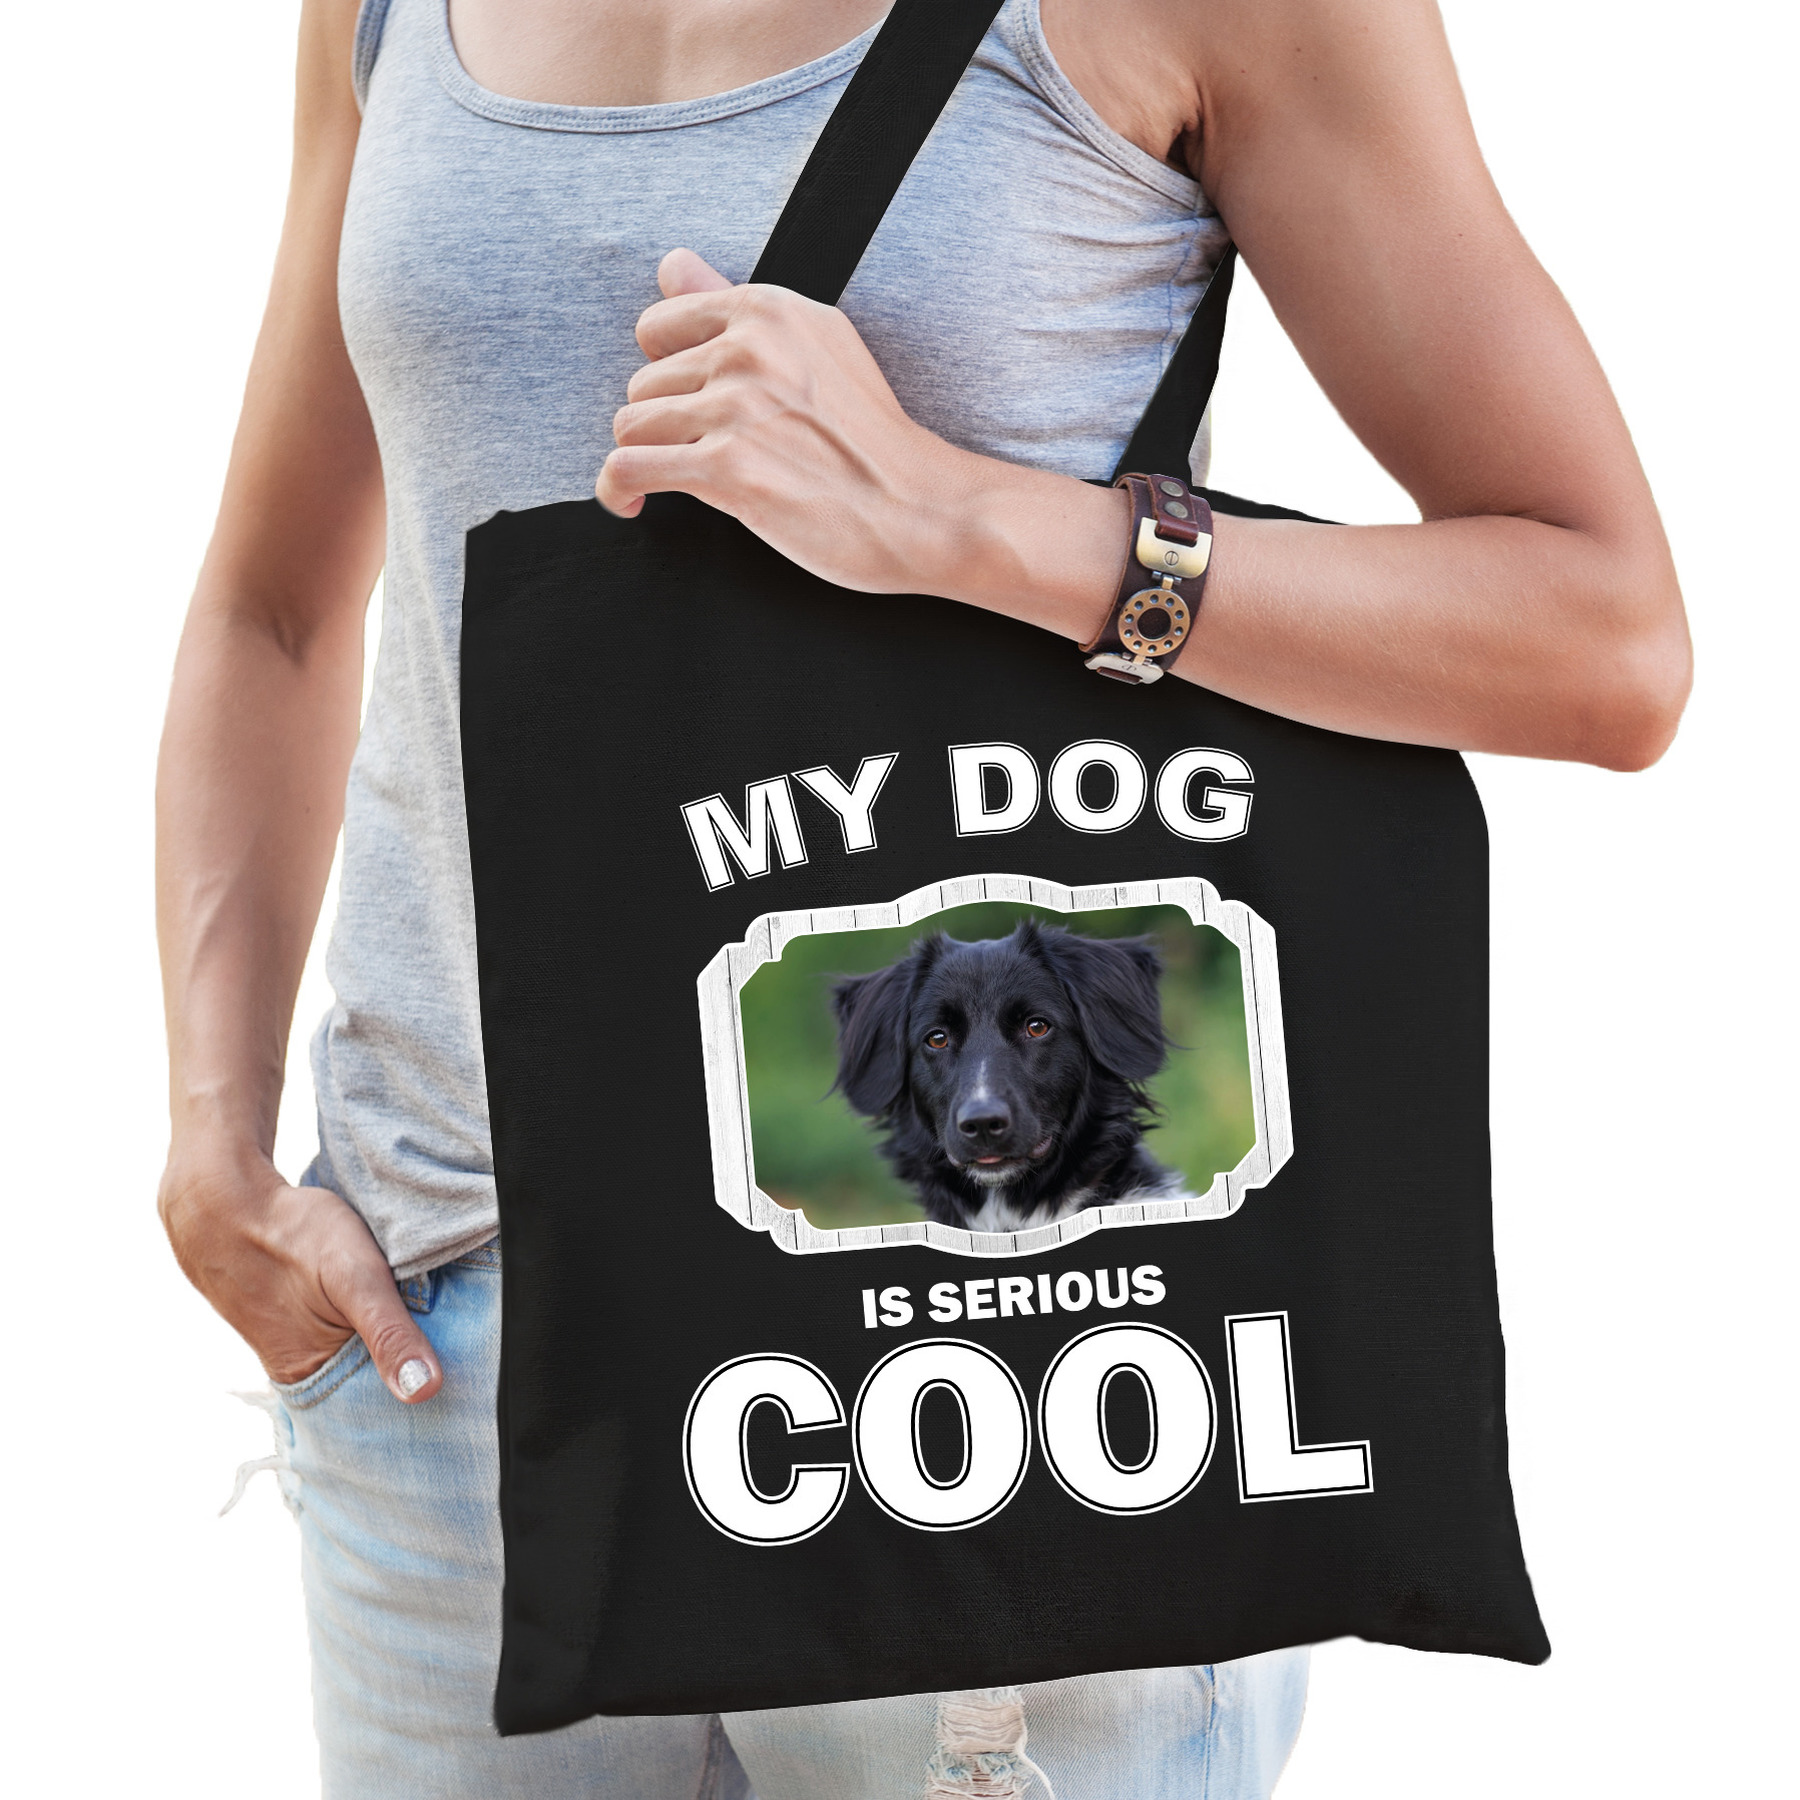 Katoenen tasje my dog is serious cool zwart - Friese stabij honden cadeau tas